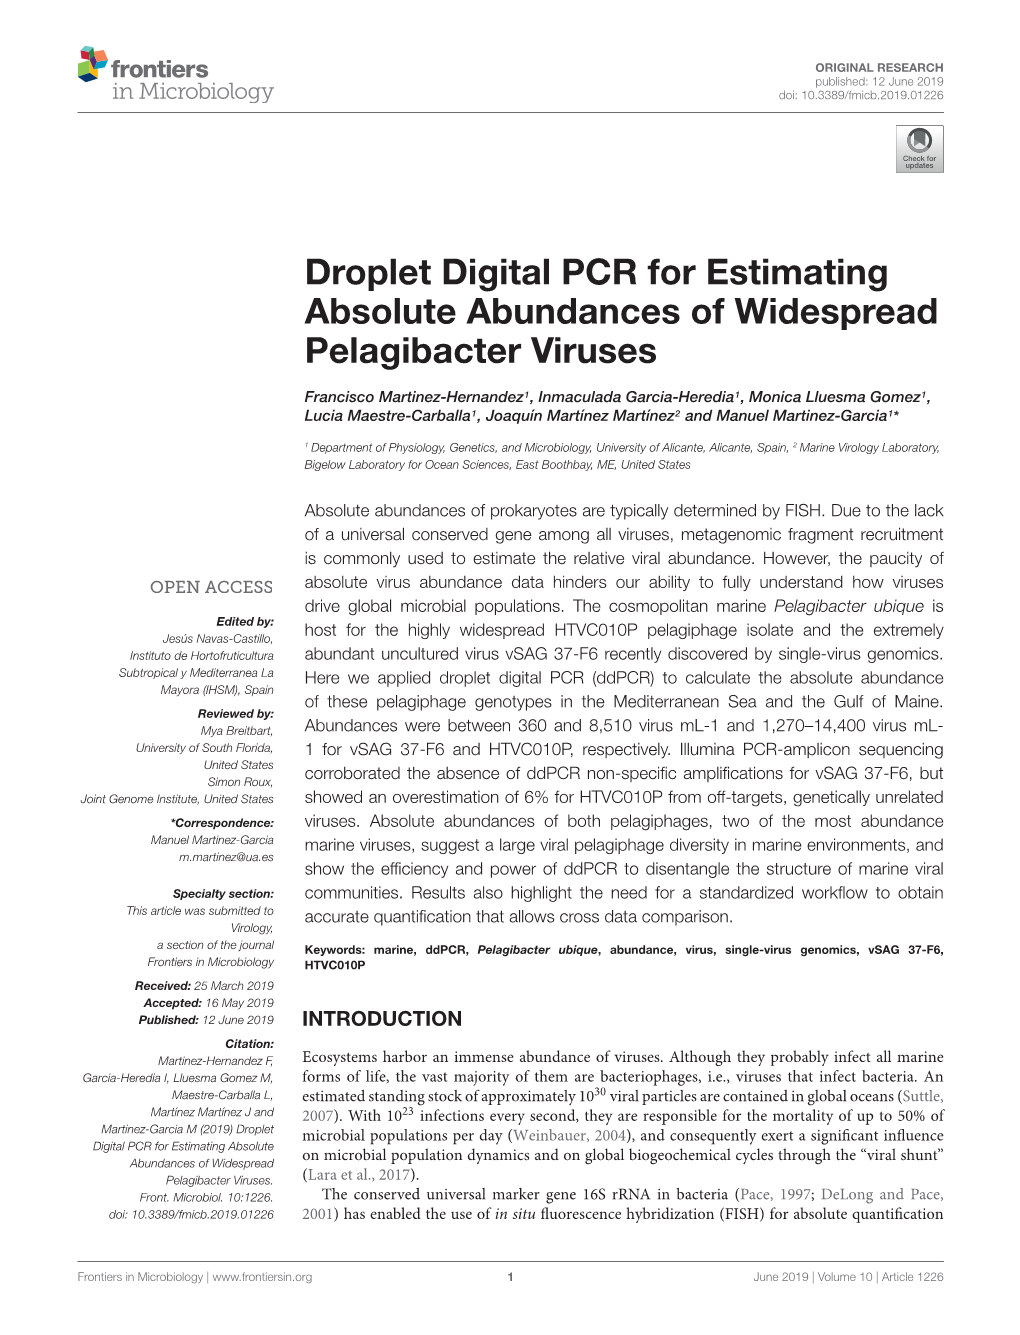 Droplet Digital PCR for Estimating Absolute Abundances of Widespread Pelagibacter Viruses